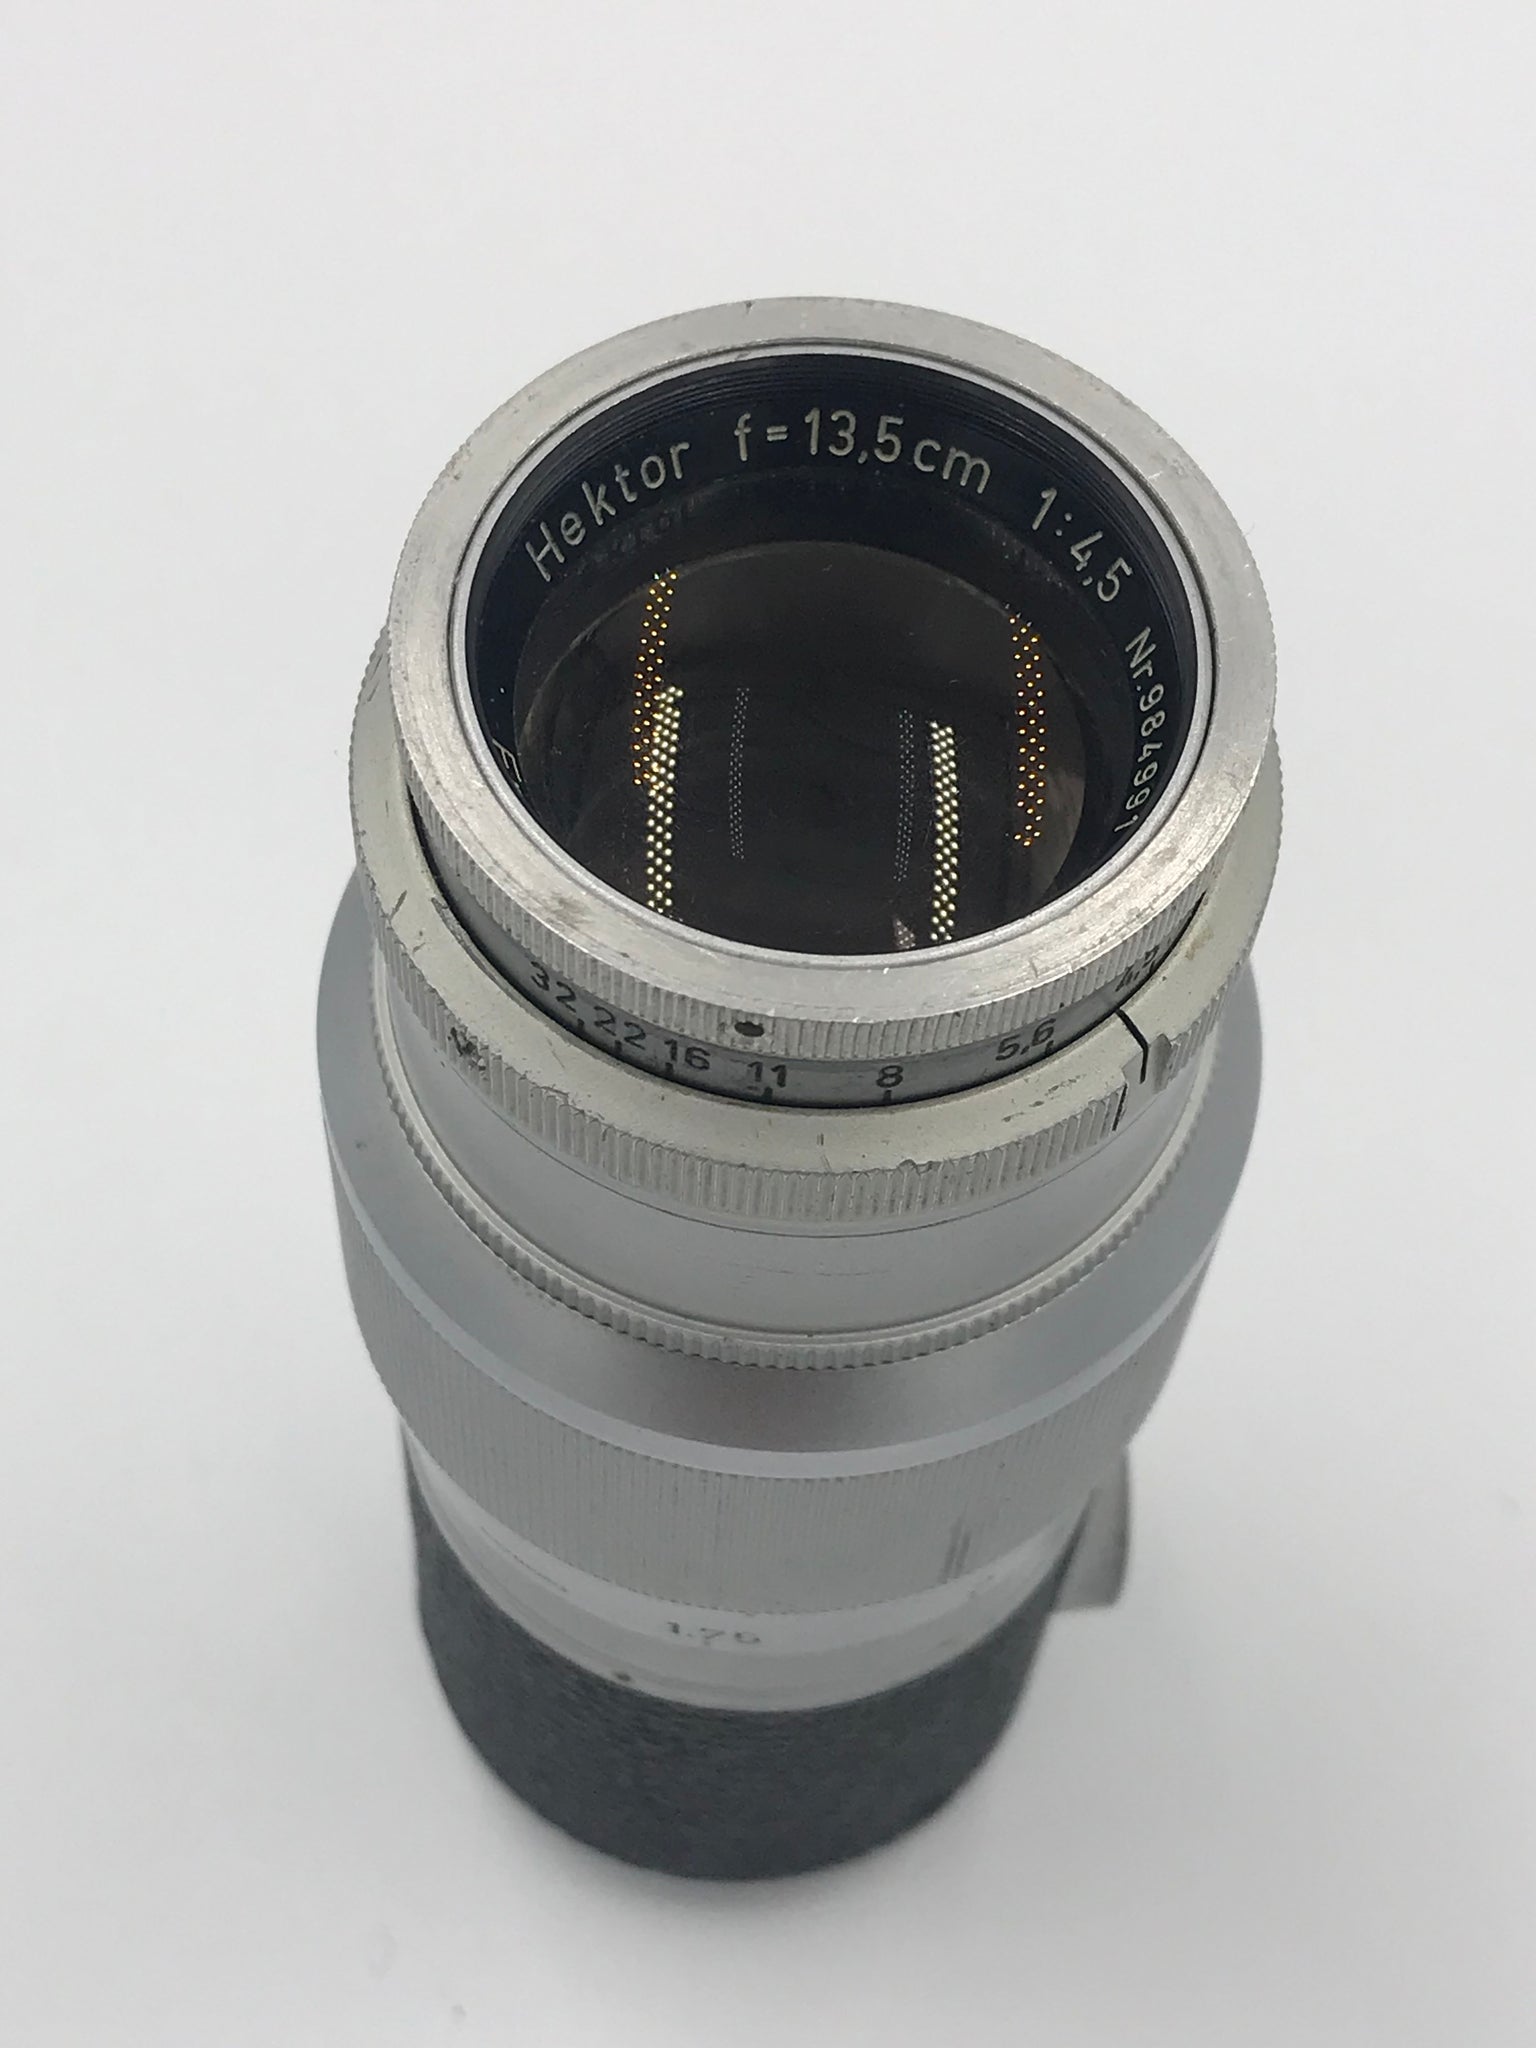 Ernst Leitz GmbH Wetzlar Hektor Hector Camera Lens f=13.5cm 1:4.5 Germ